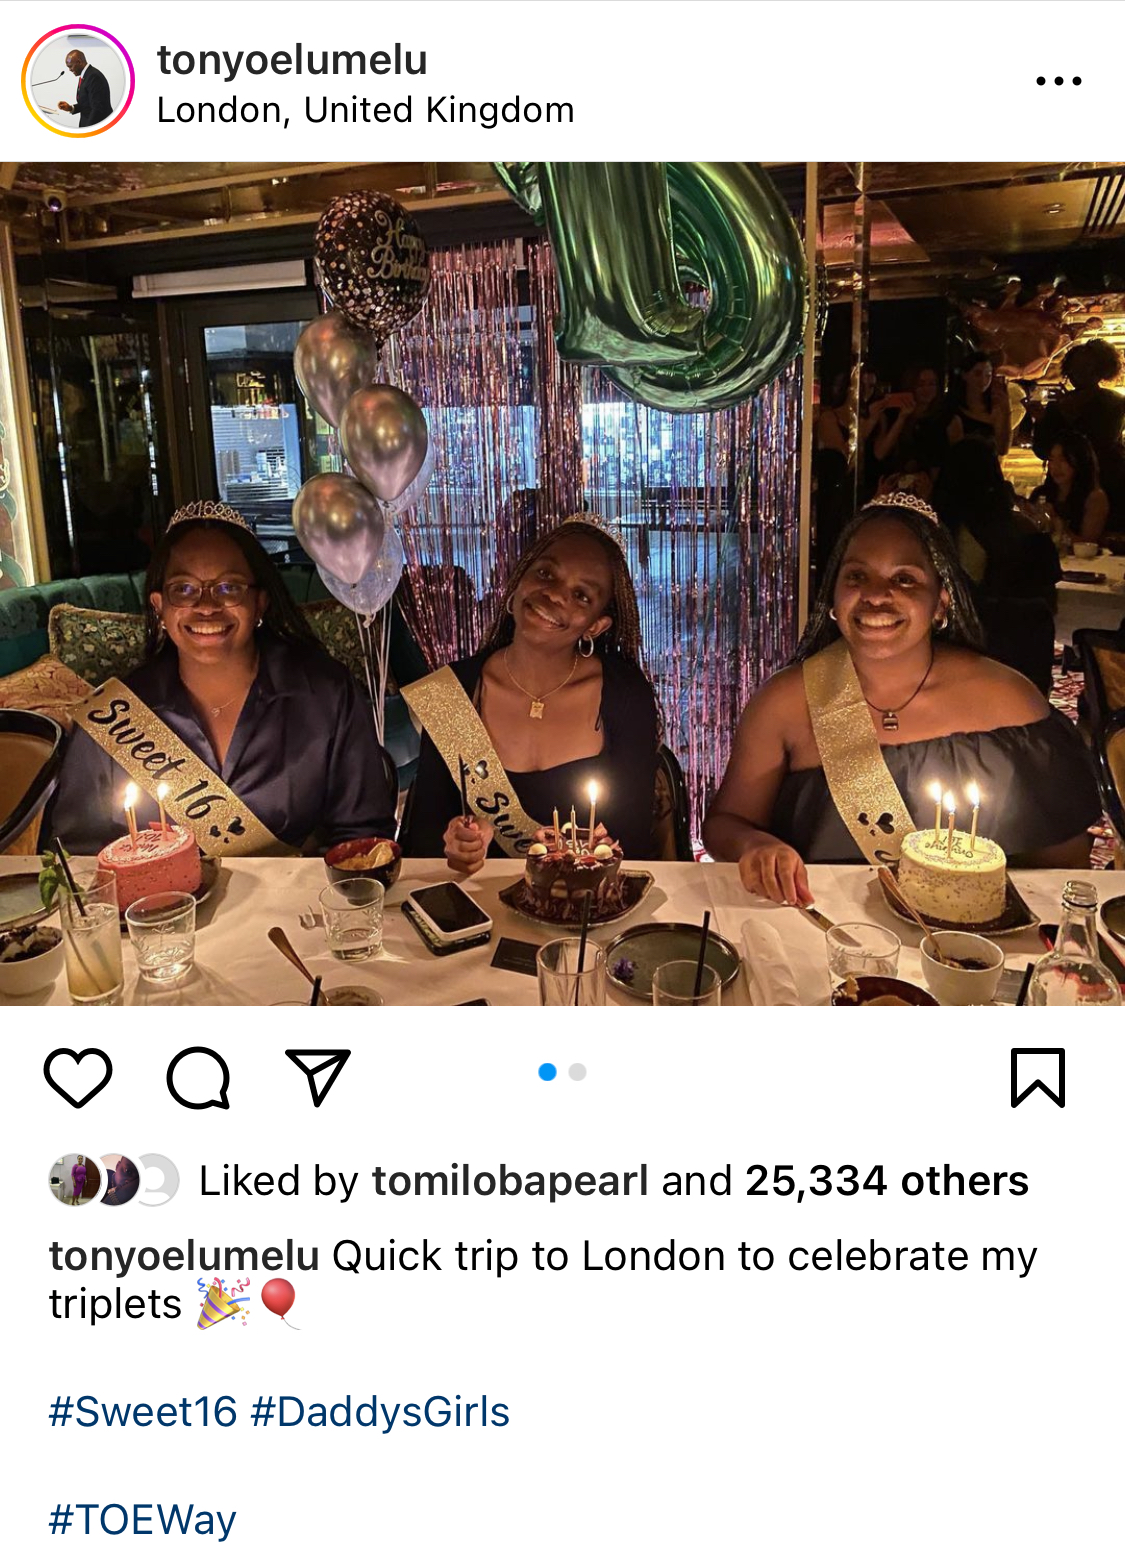 Billionaire Tony Elumelu celebrates his triplet daughters as they turn 16 [photos]